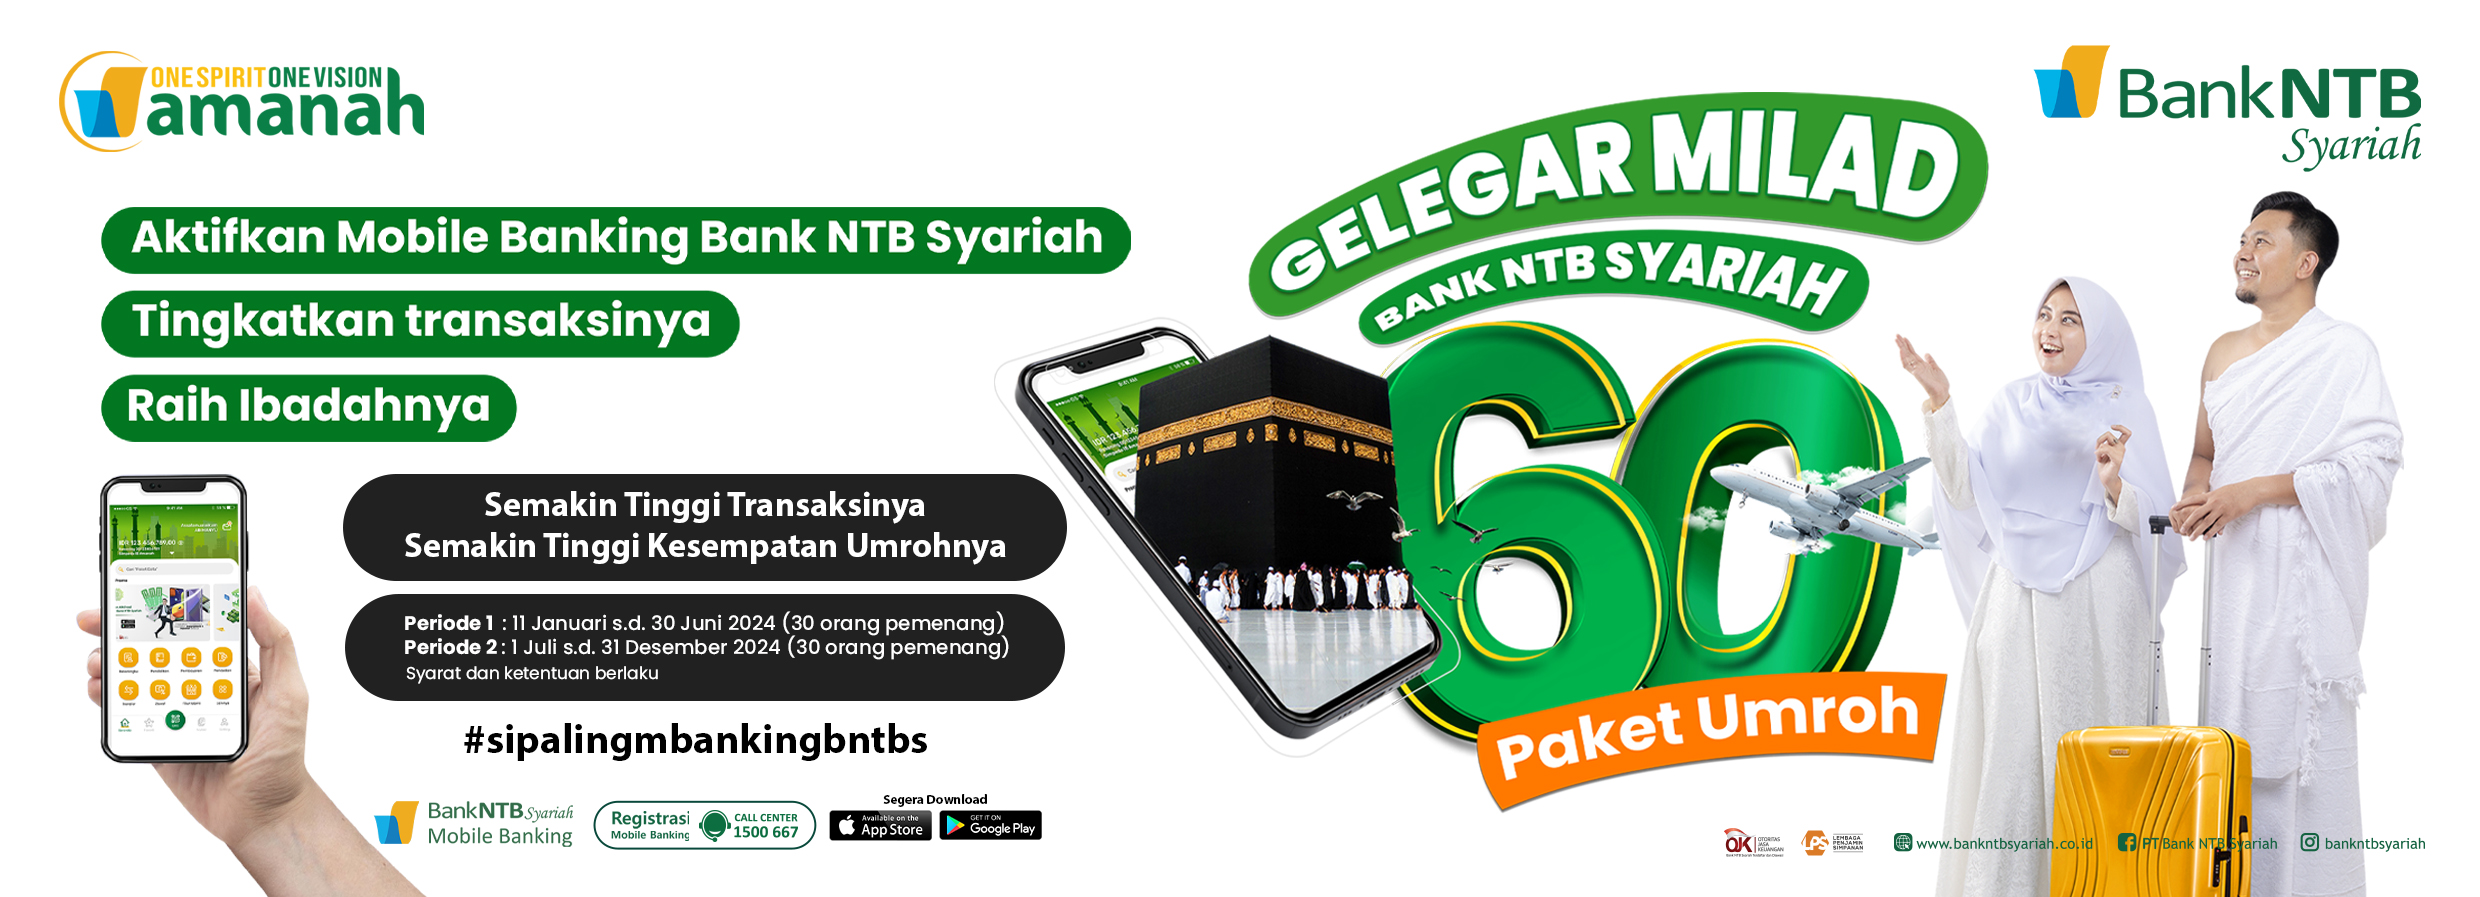 Gelegar Milad Bank NTB Syariah ke-60